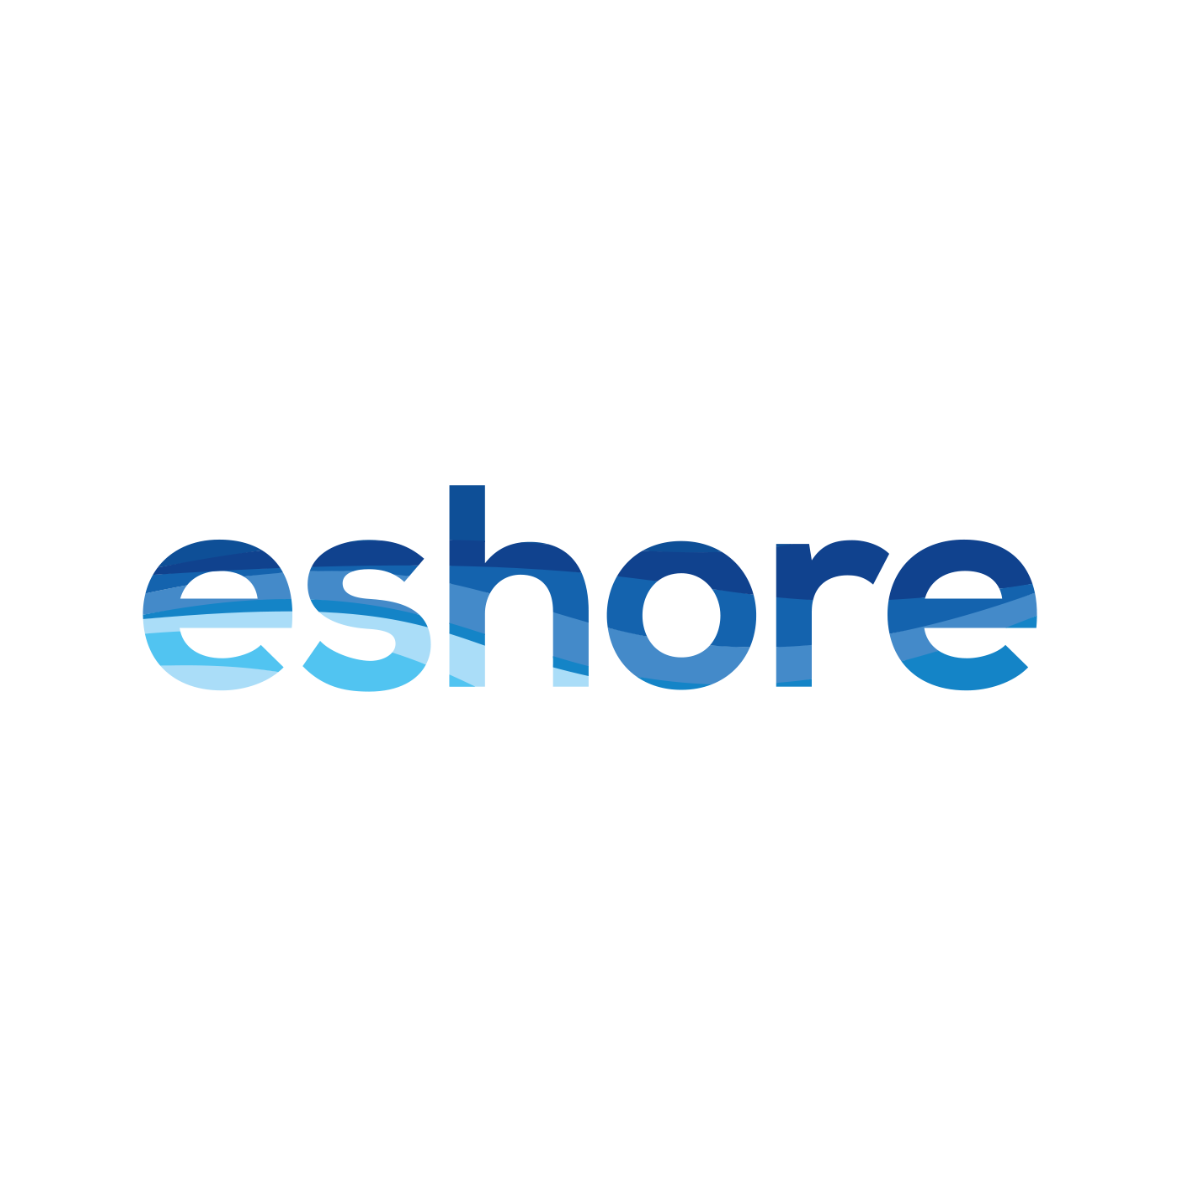 eShore